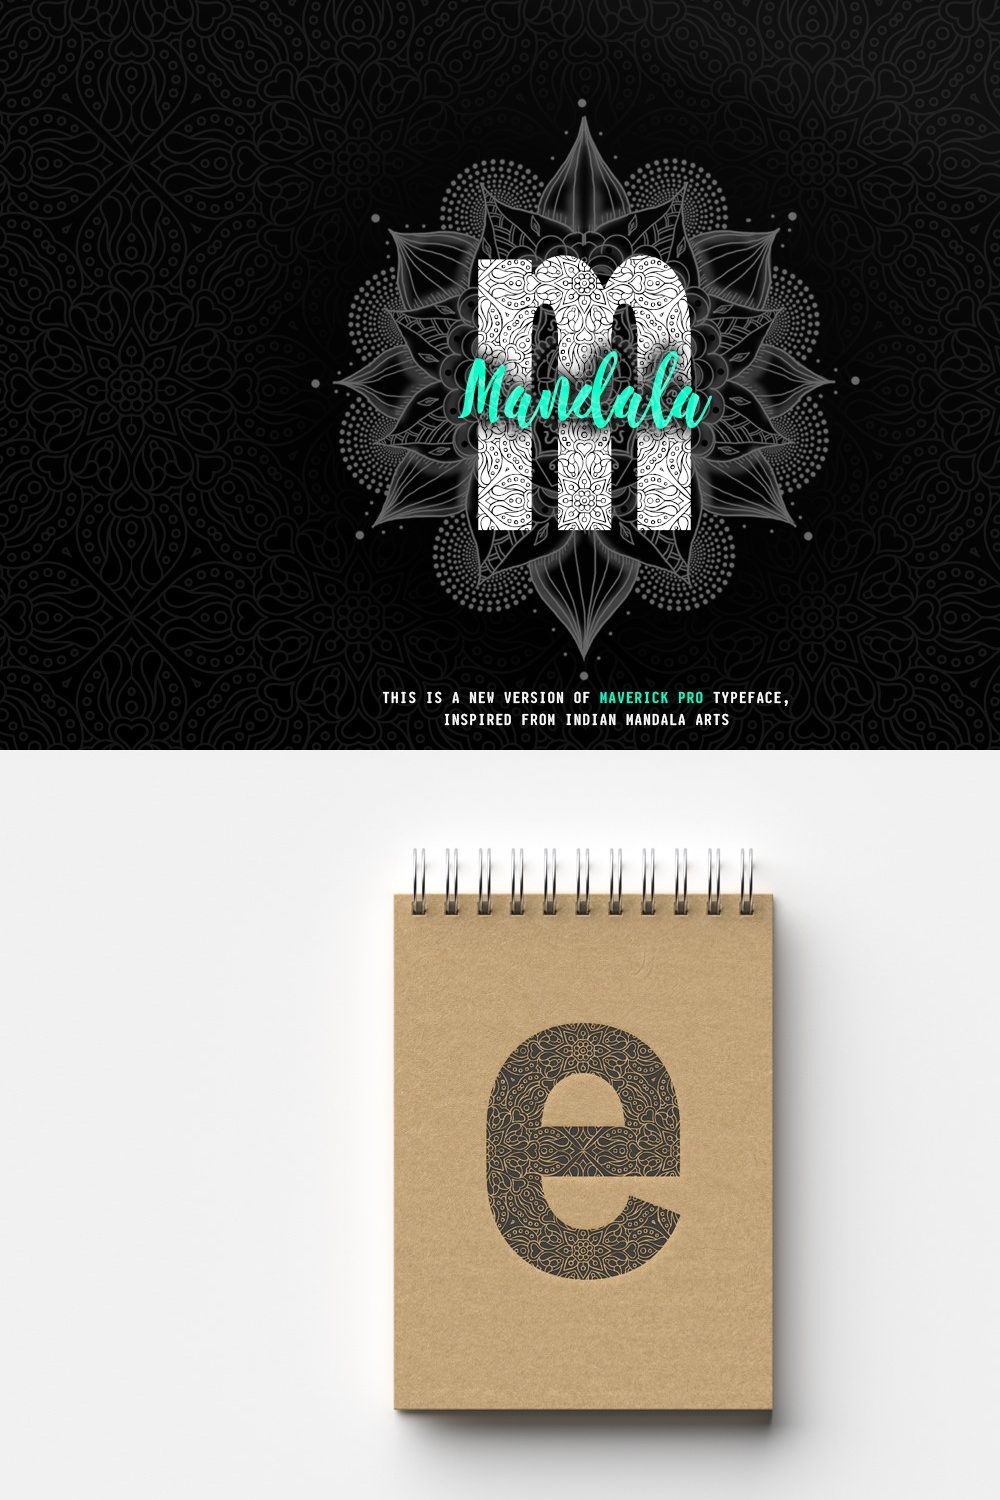 Maverick Mandala - Textured Typeface pinterest preview image.